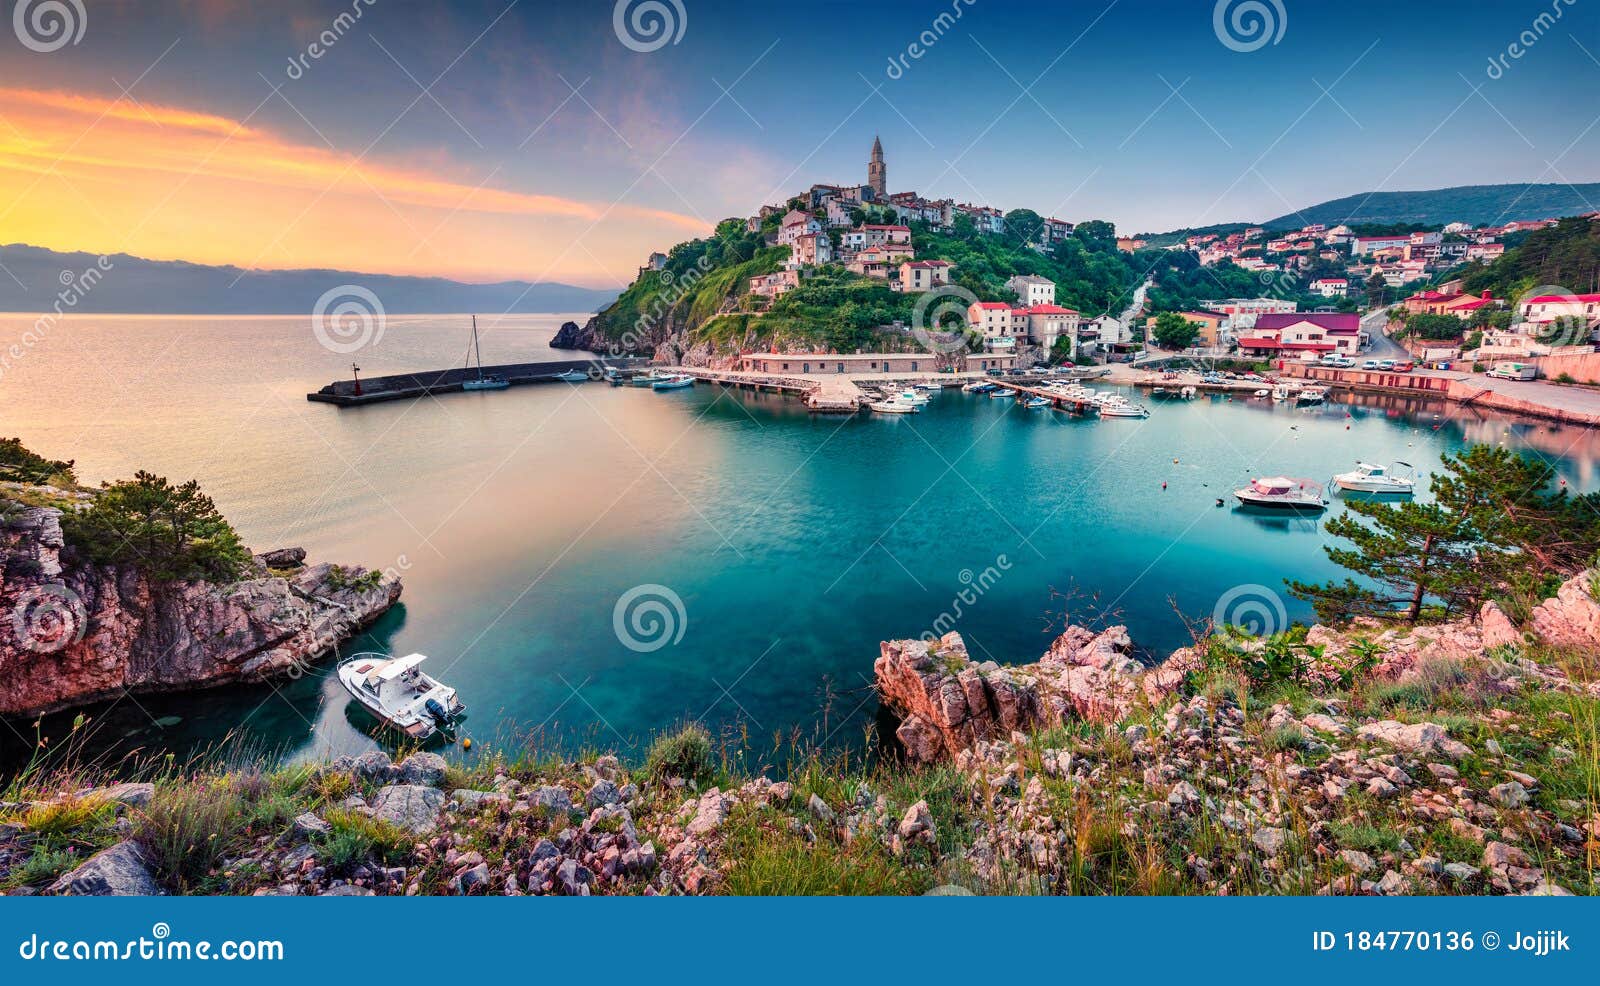 exciting morning cityscape of vrbnik town. colorful summer seascape of adriatic sea, krk island, kvarner bay archipelago, croatia